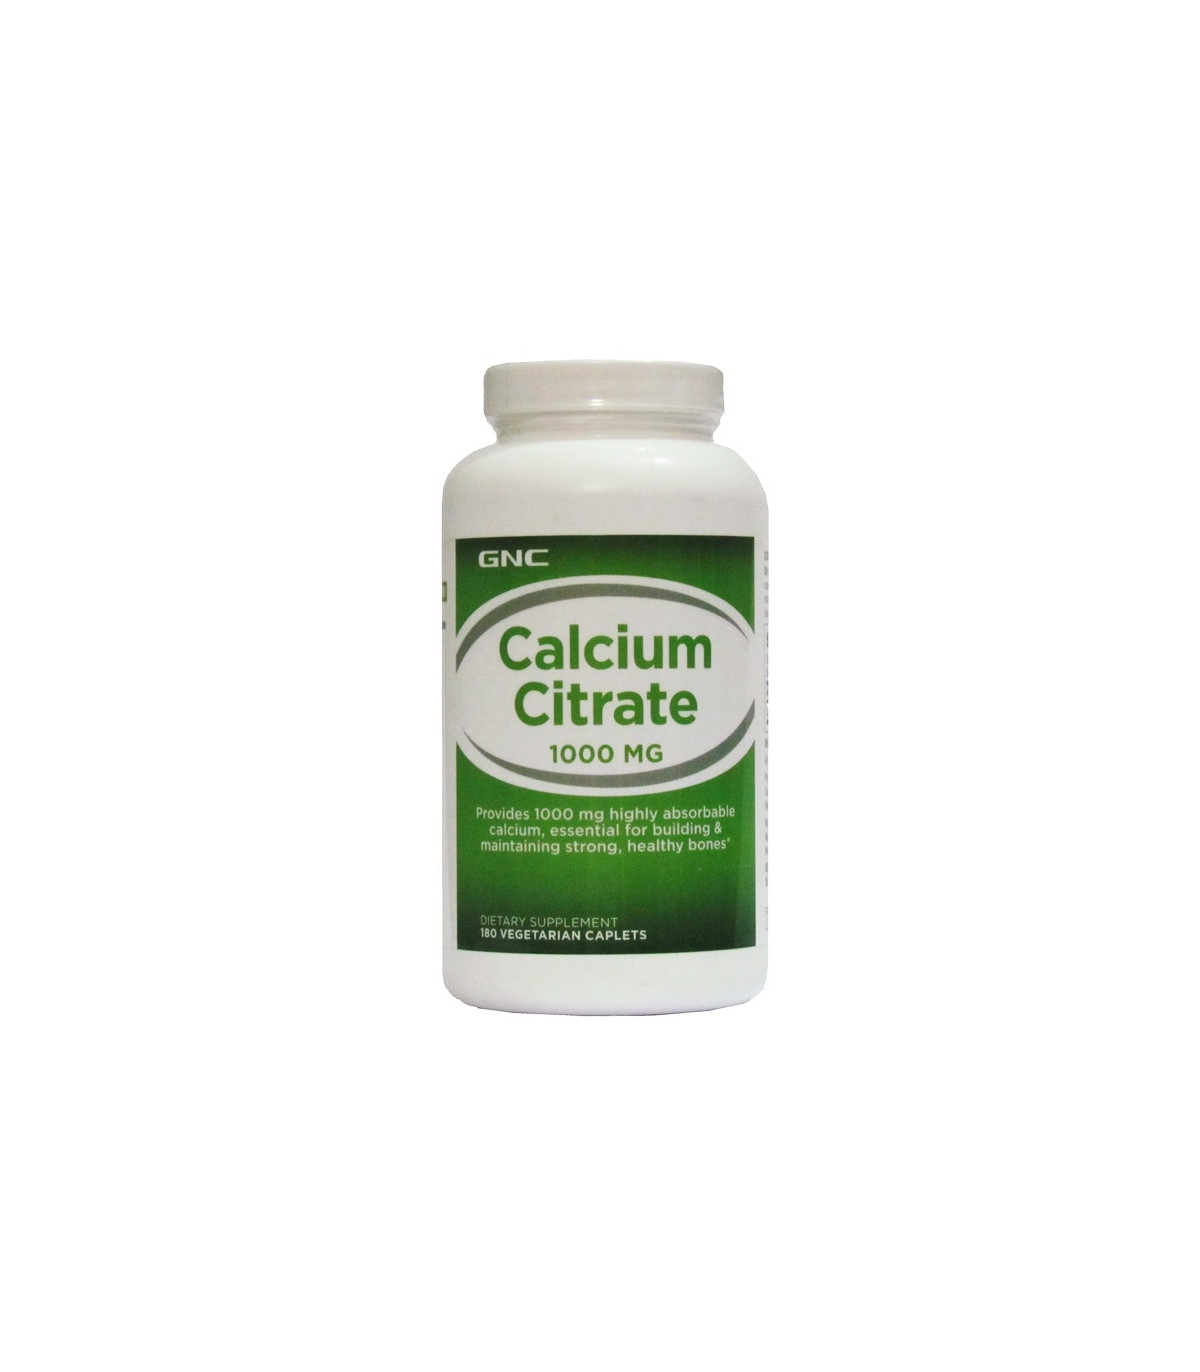 GNC Calcium Citrate 1000mg – 180 Caplets